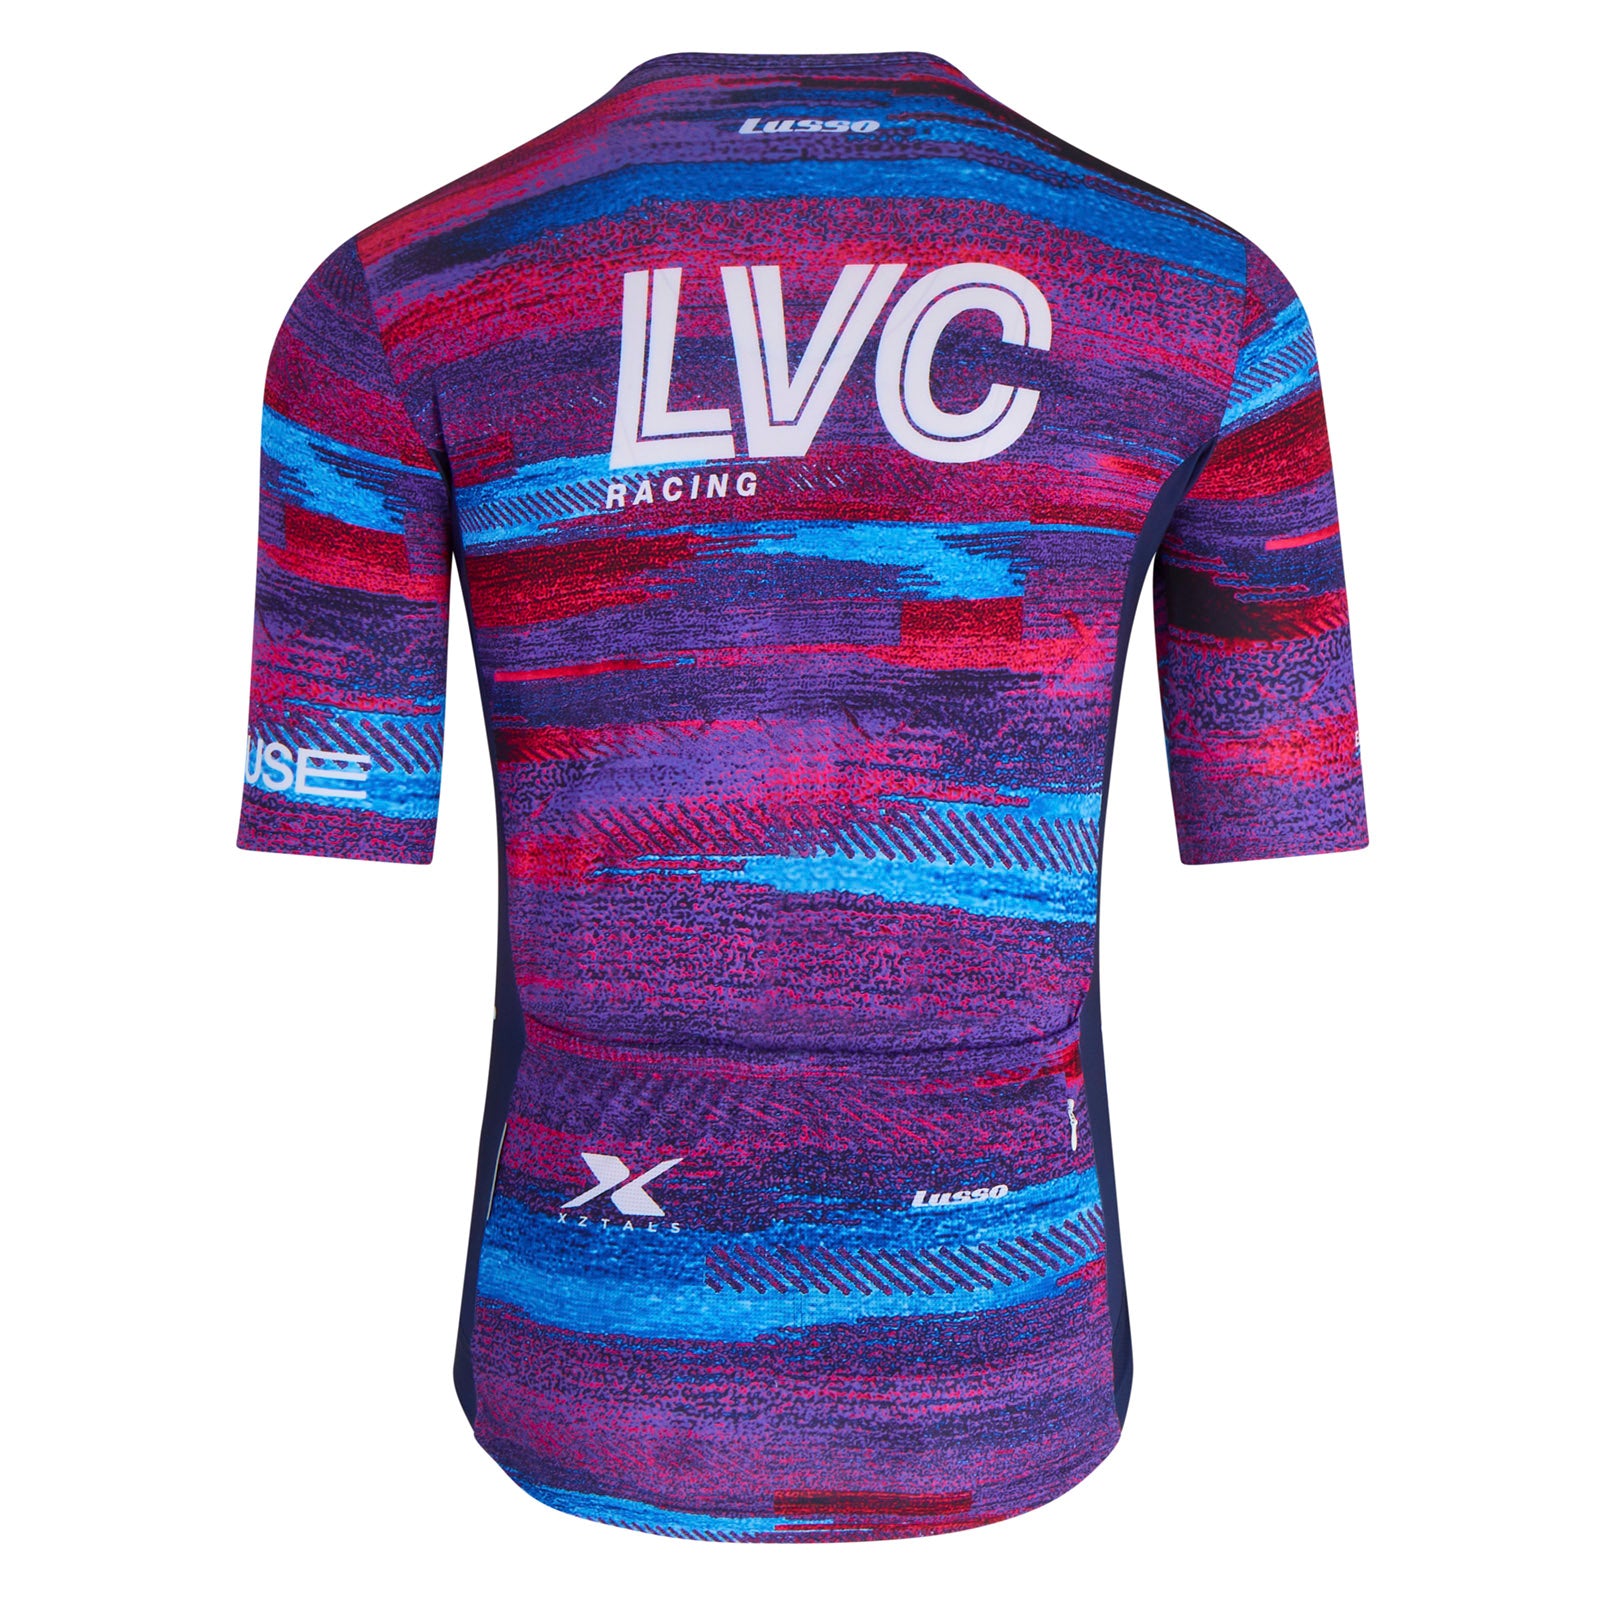 LVC racing aero jersey - Lusso Cycle Wear